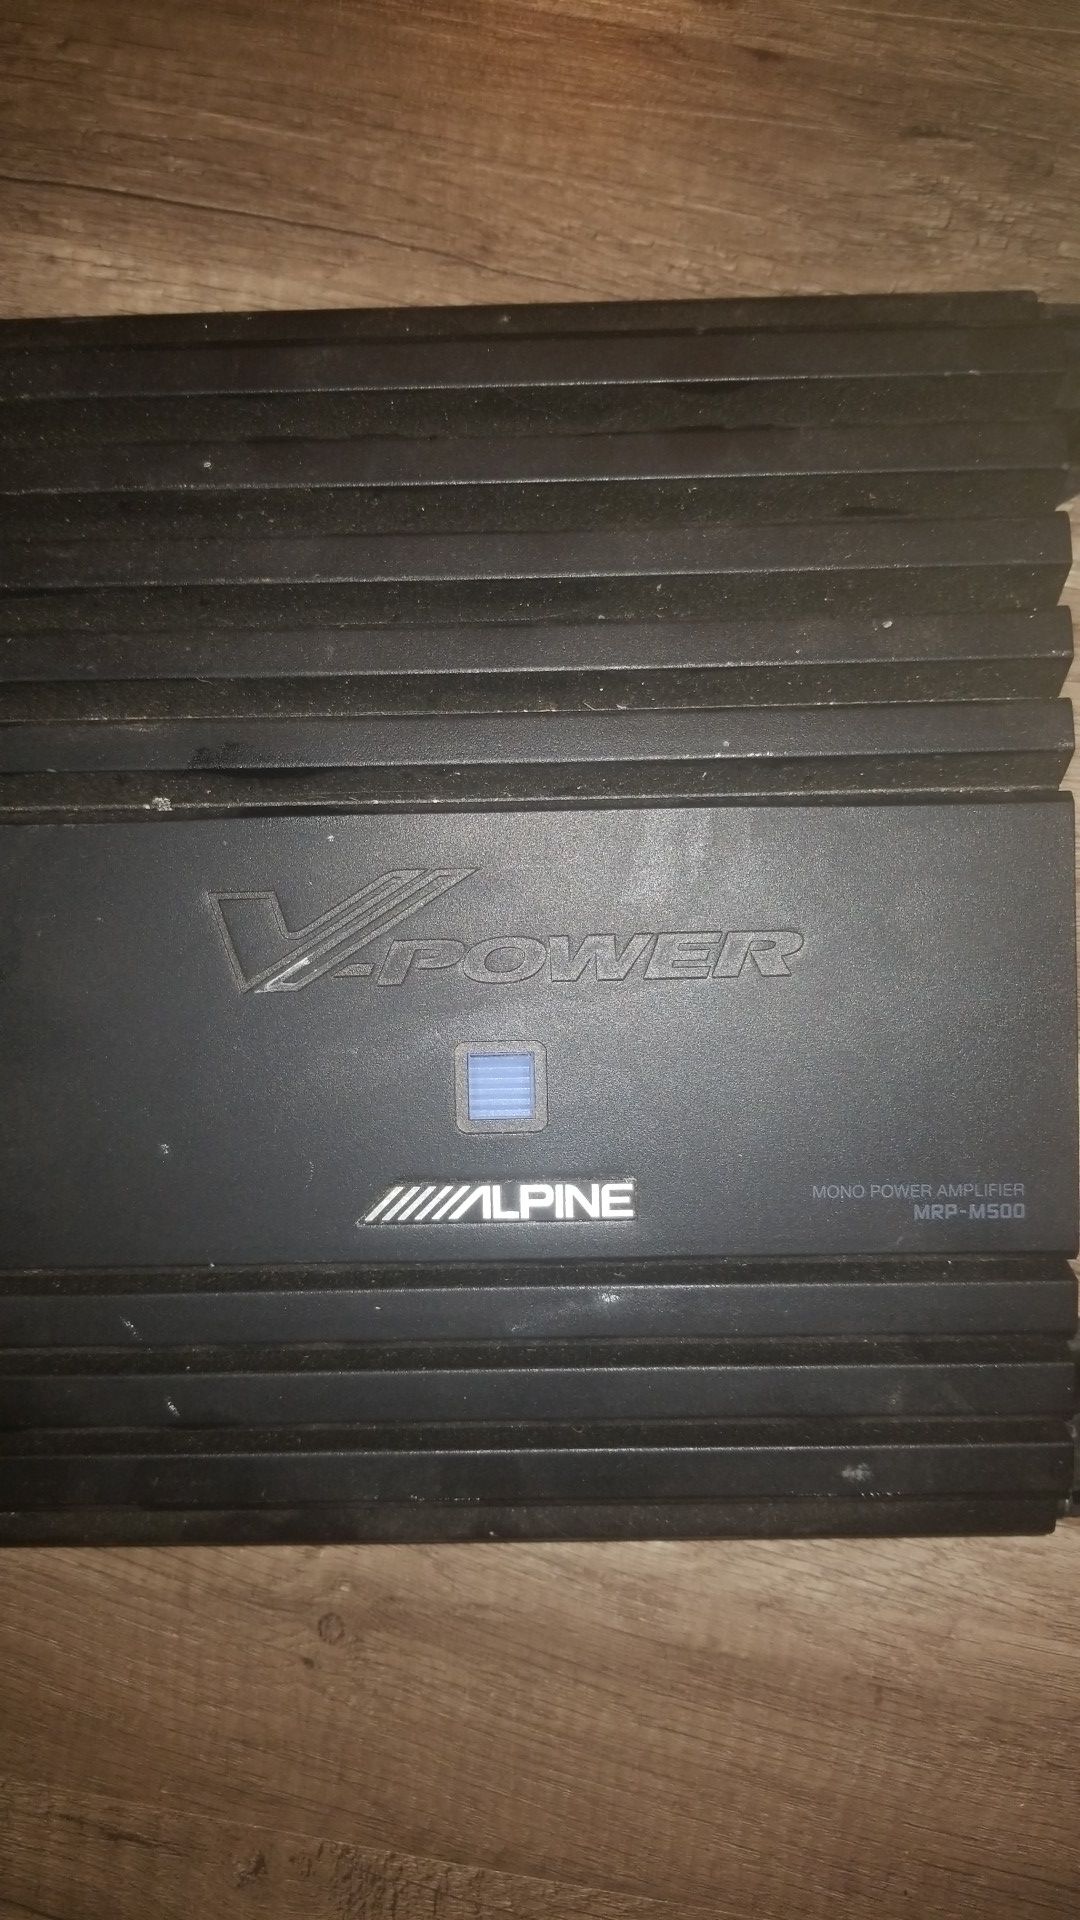 Alpine amplifier